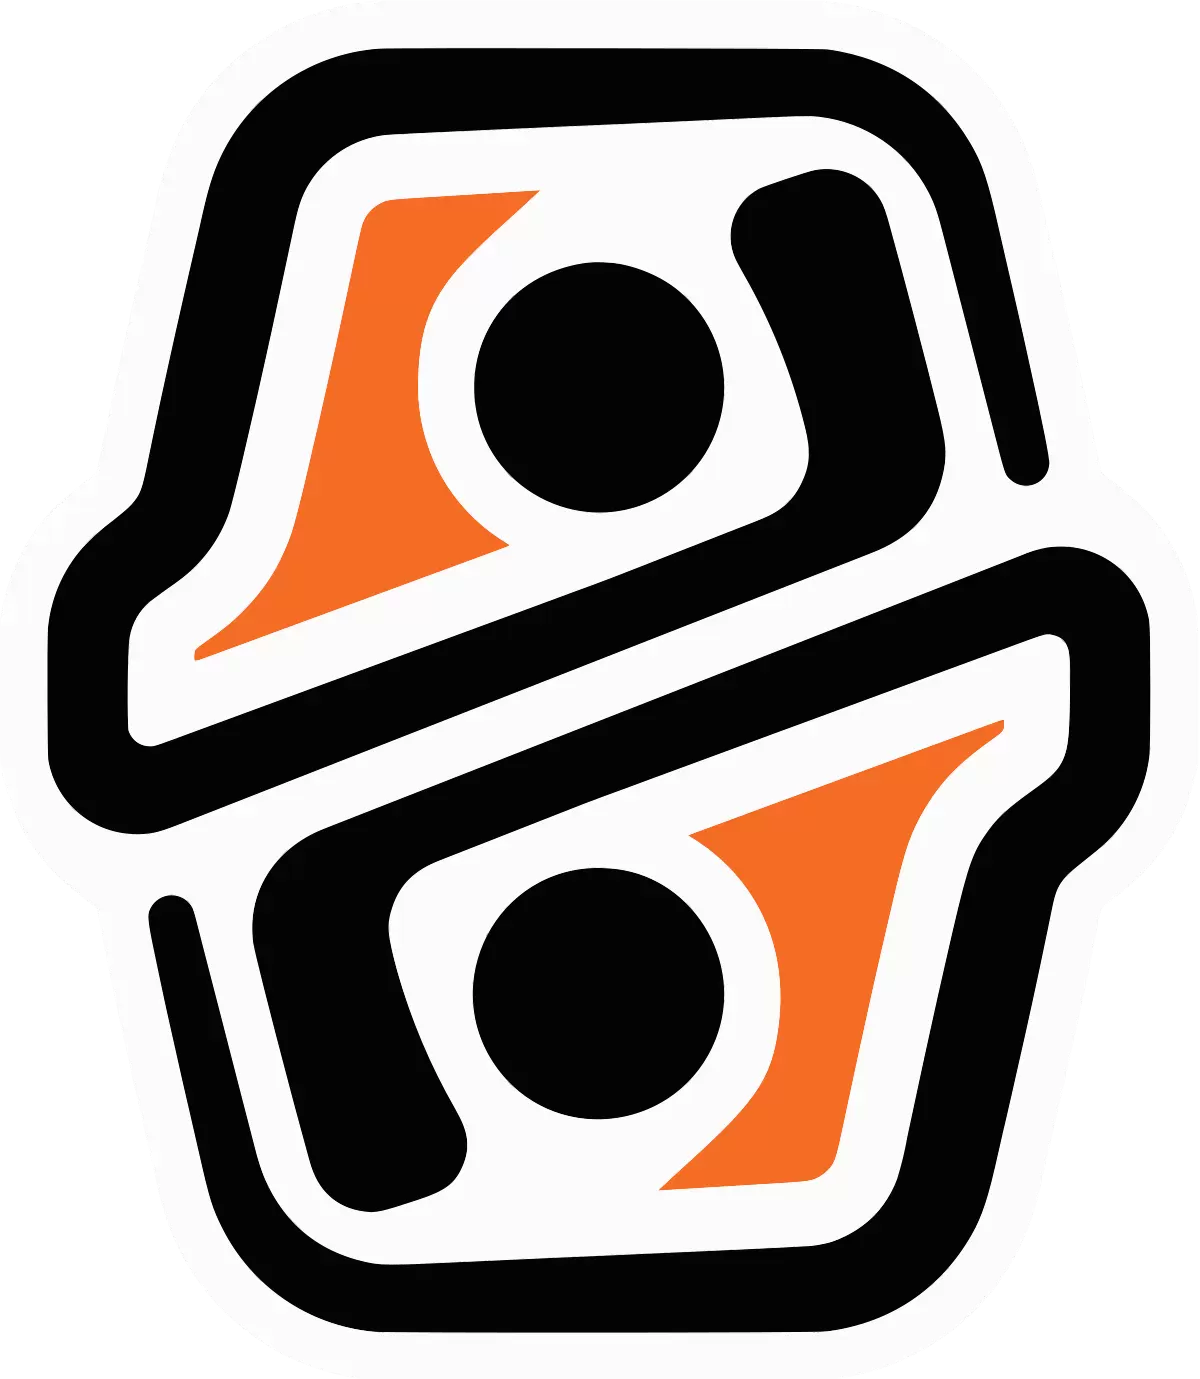 HC Košice logo